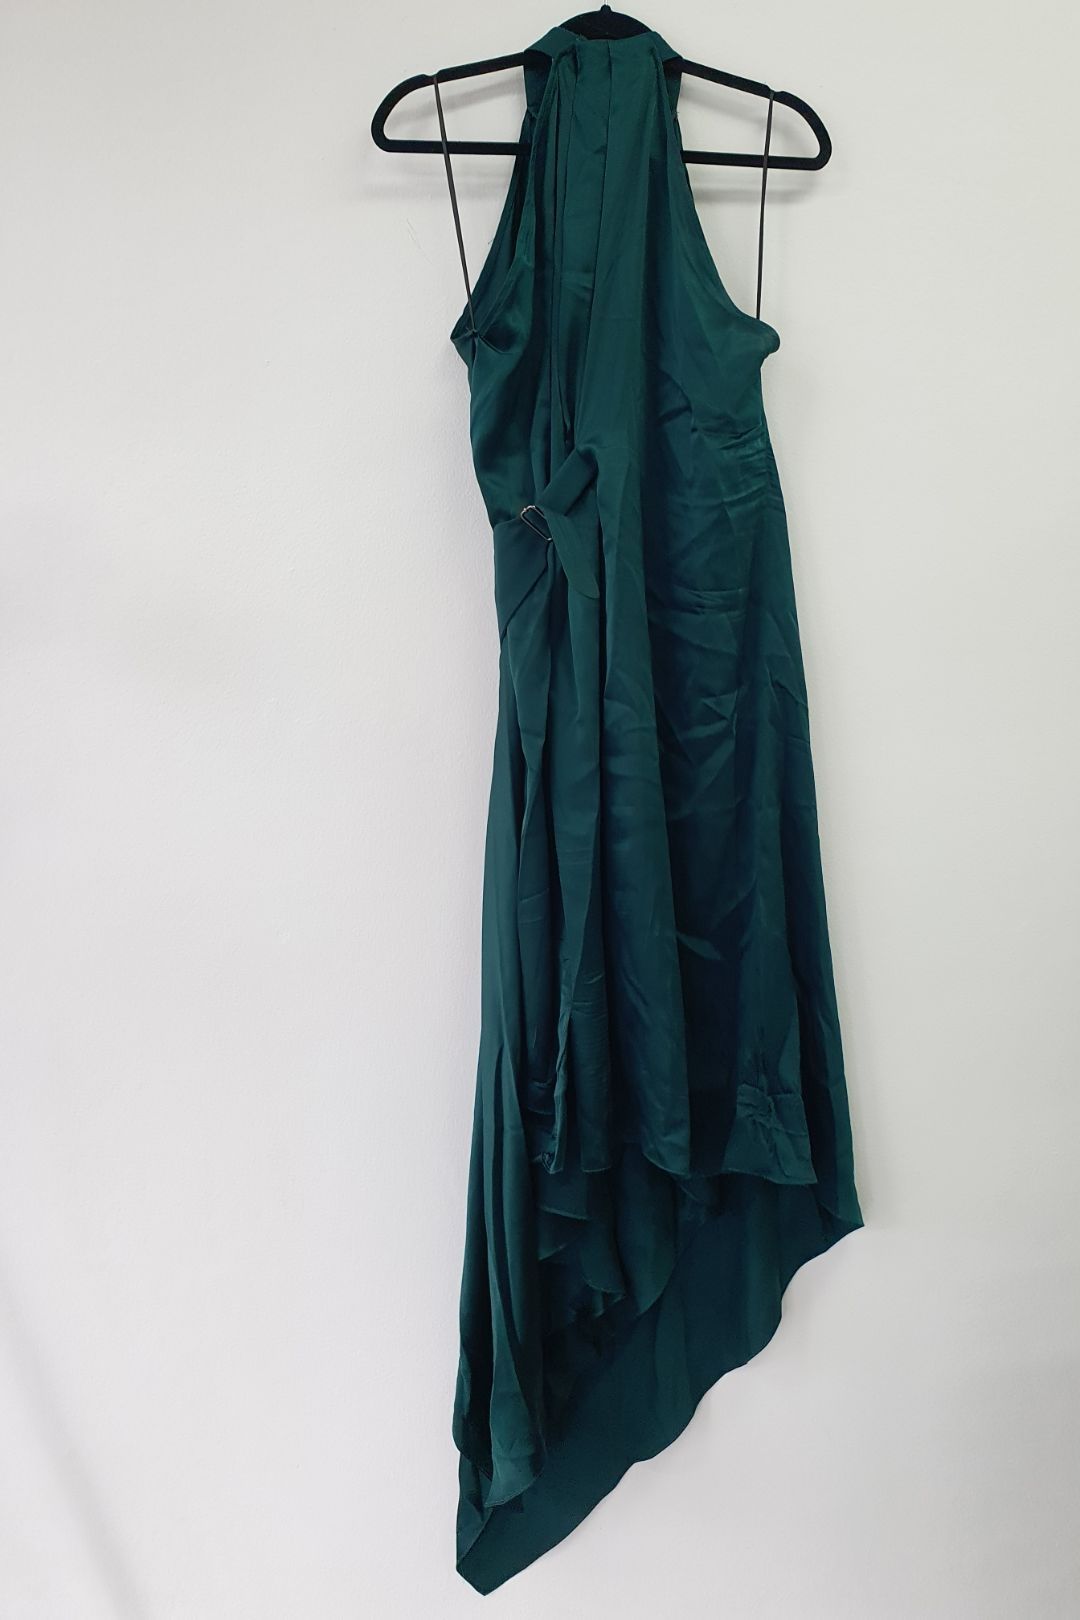 Buy Petrol Silk Isabella Dress | Bianca Spender | GlamCorner